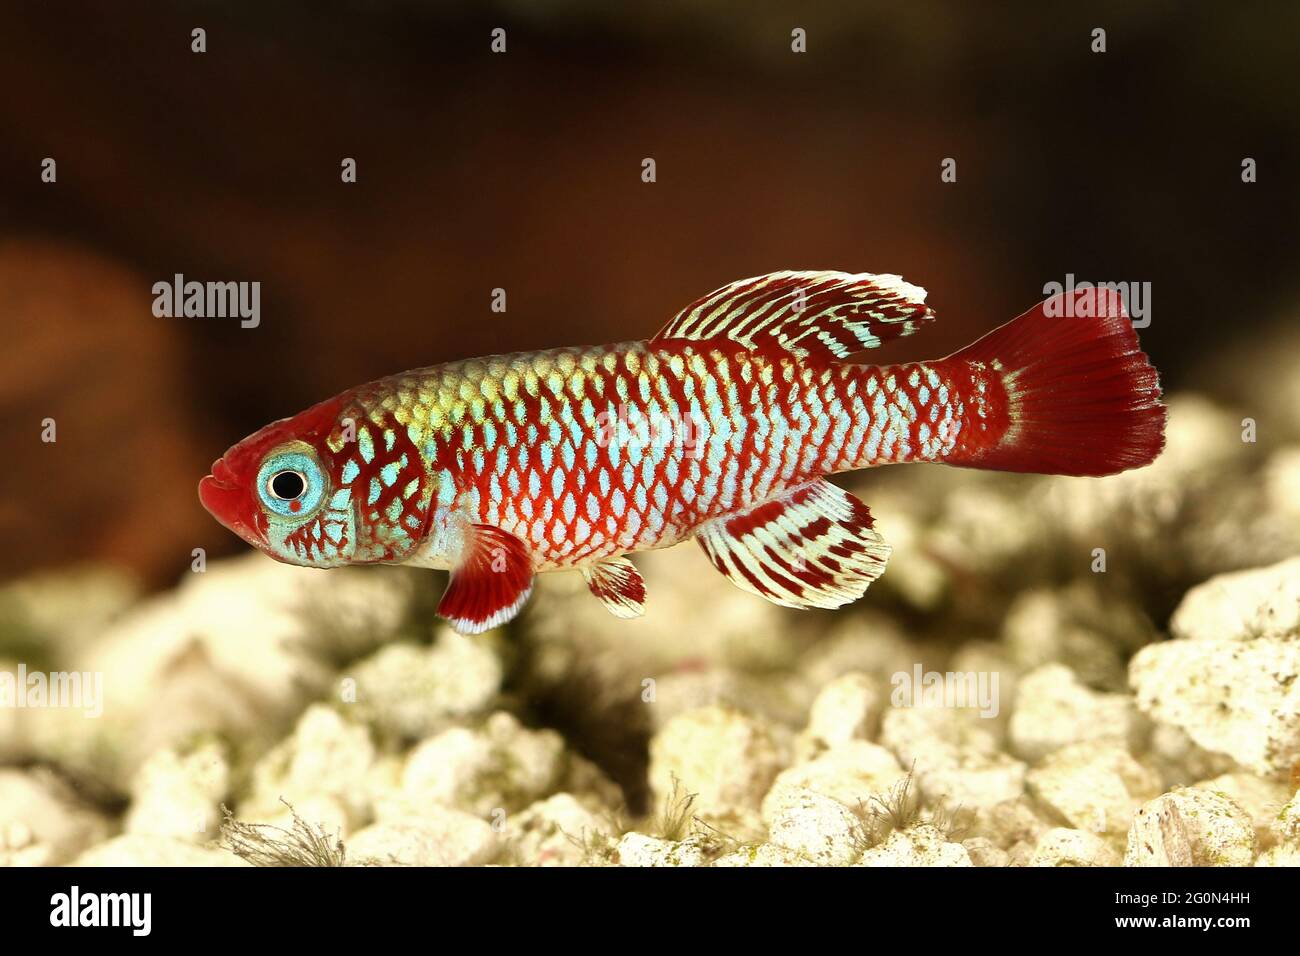 Red eggersi killifish aquarium fish Nothobranchius eggersi Stock Photo